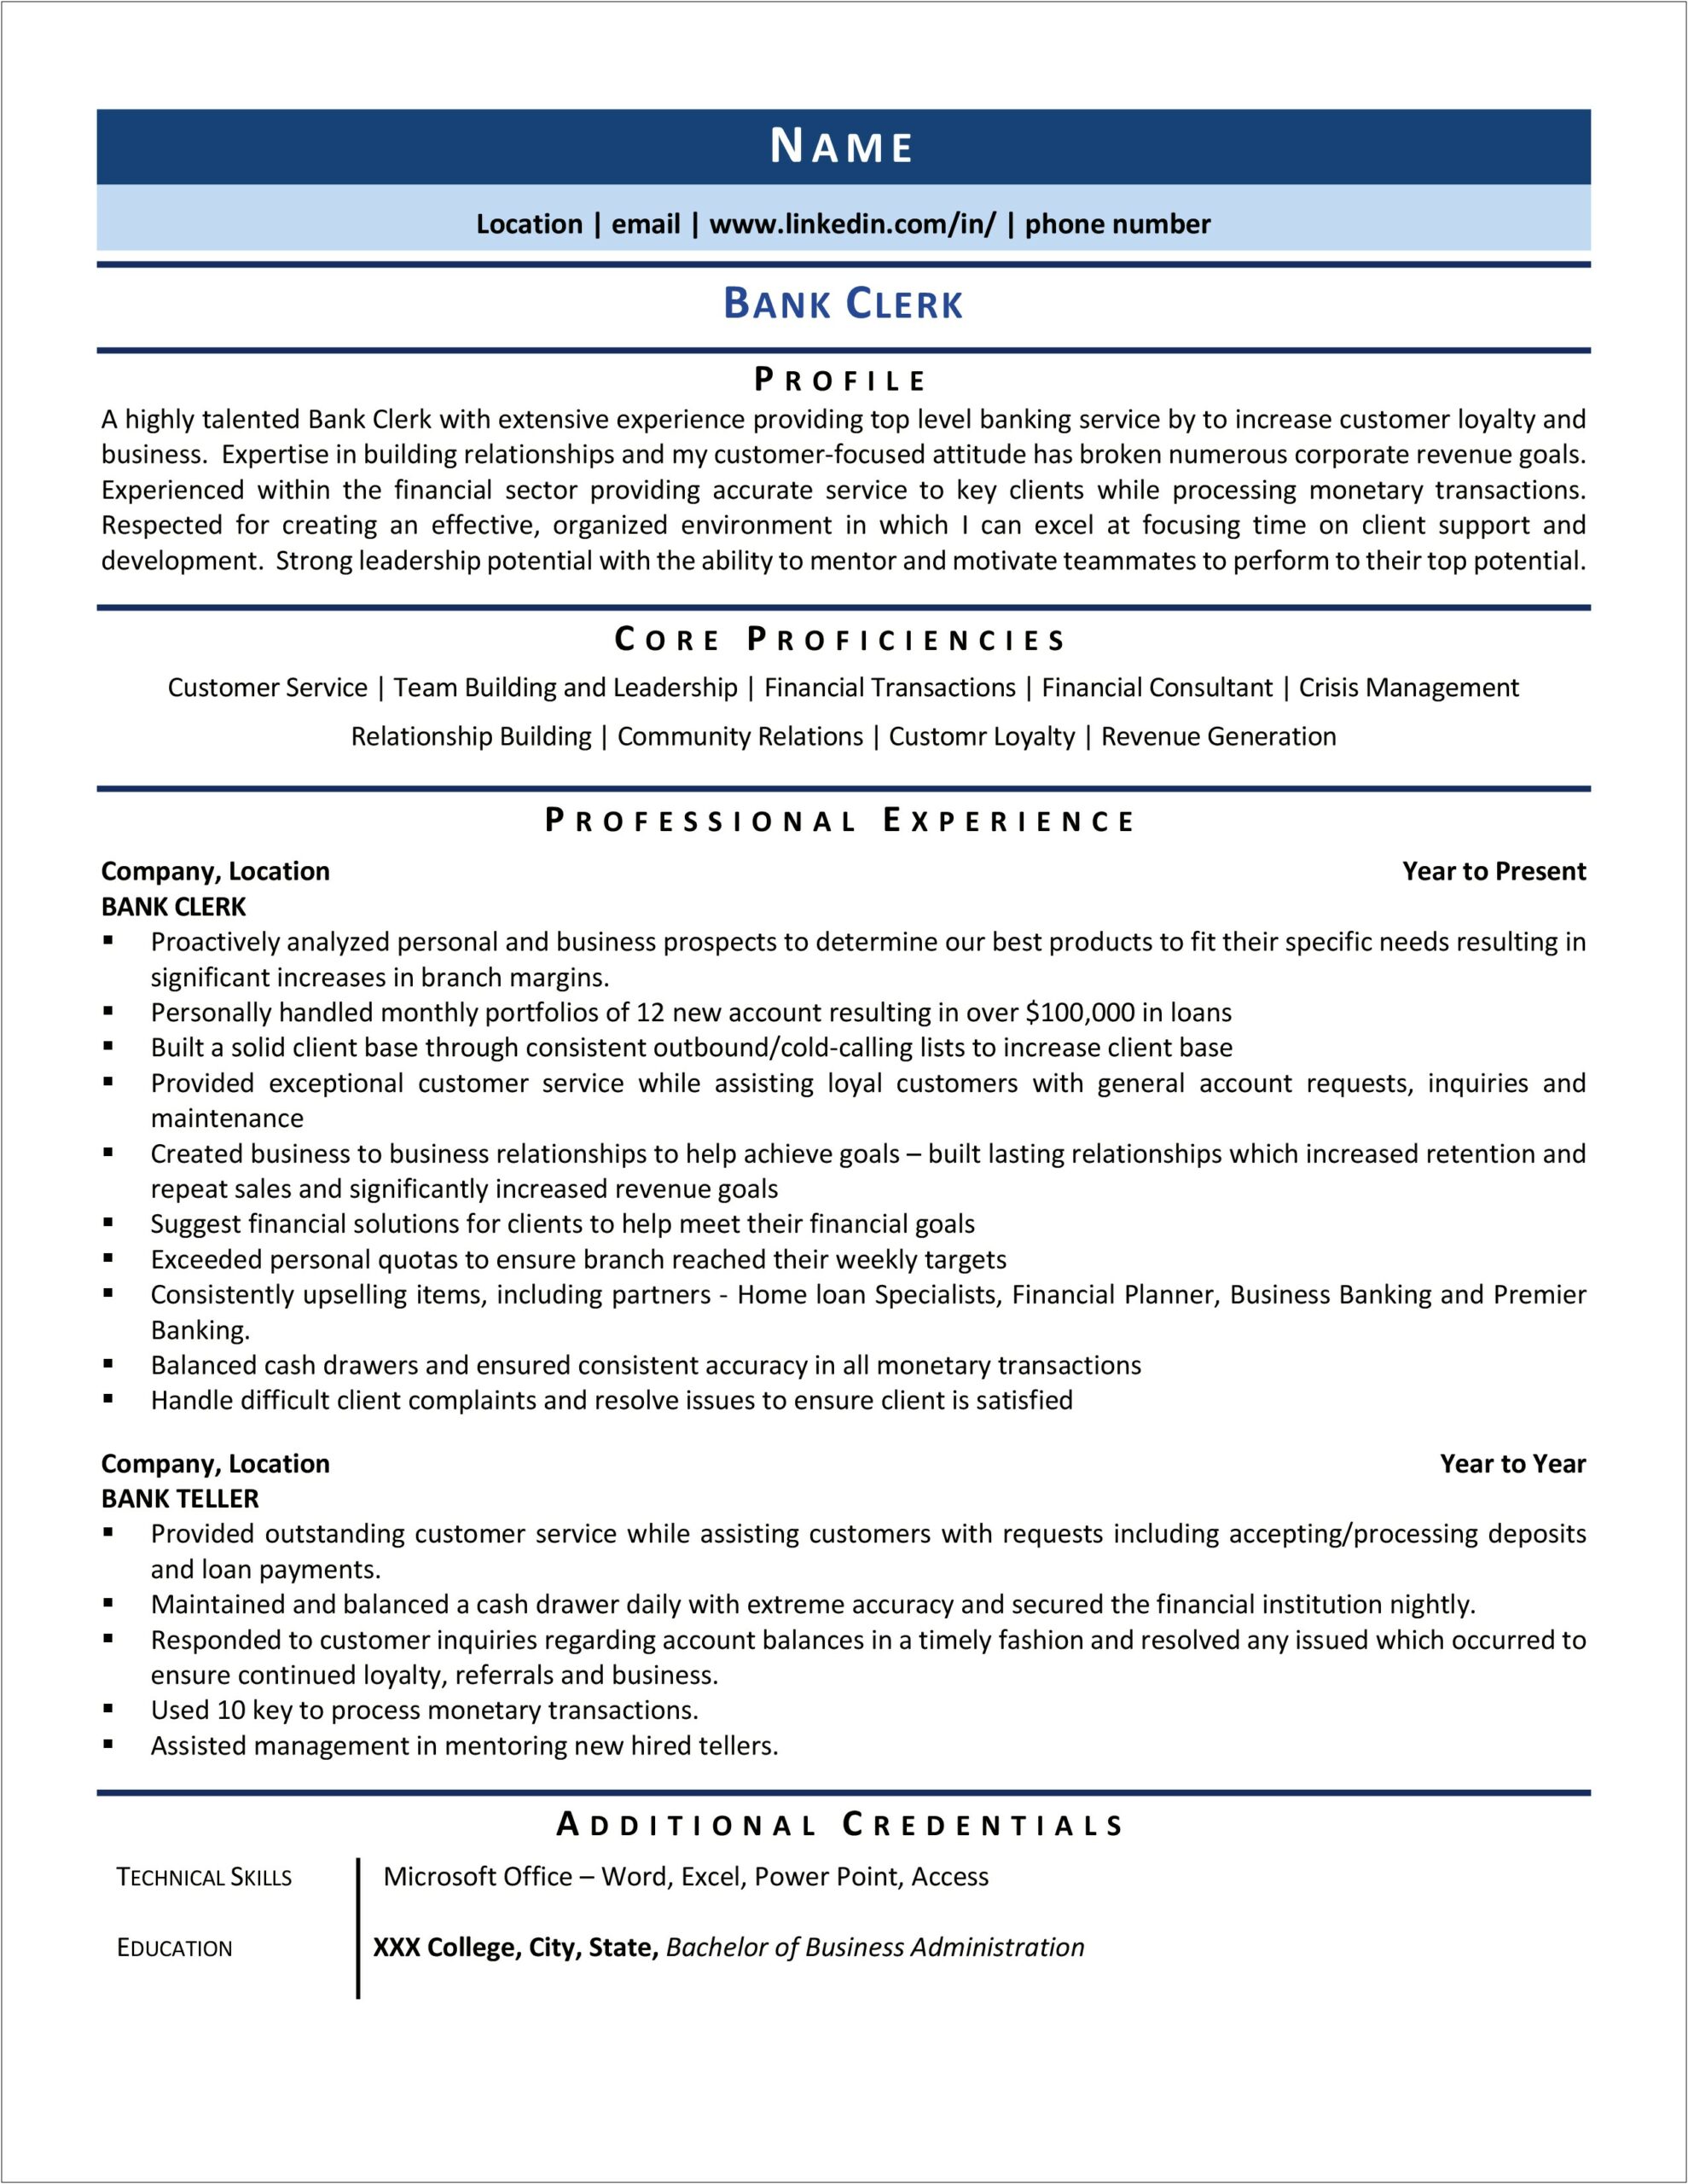 Finance Consultant Job Description For Resume